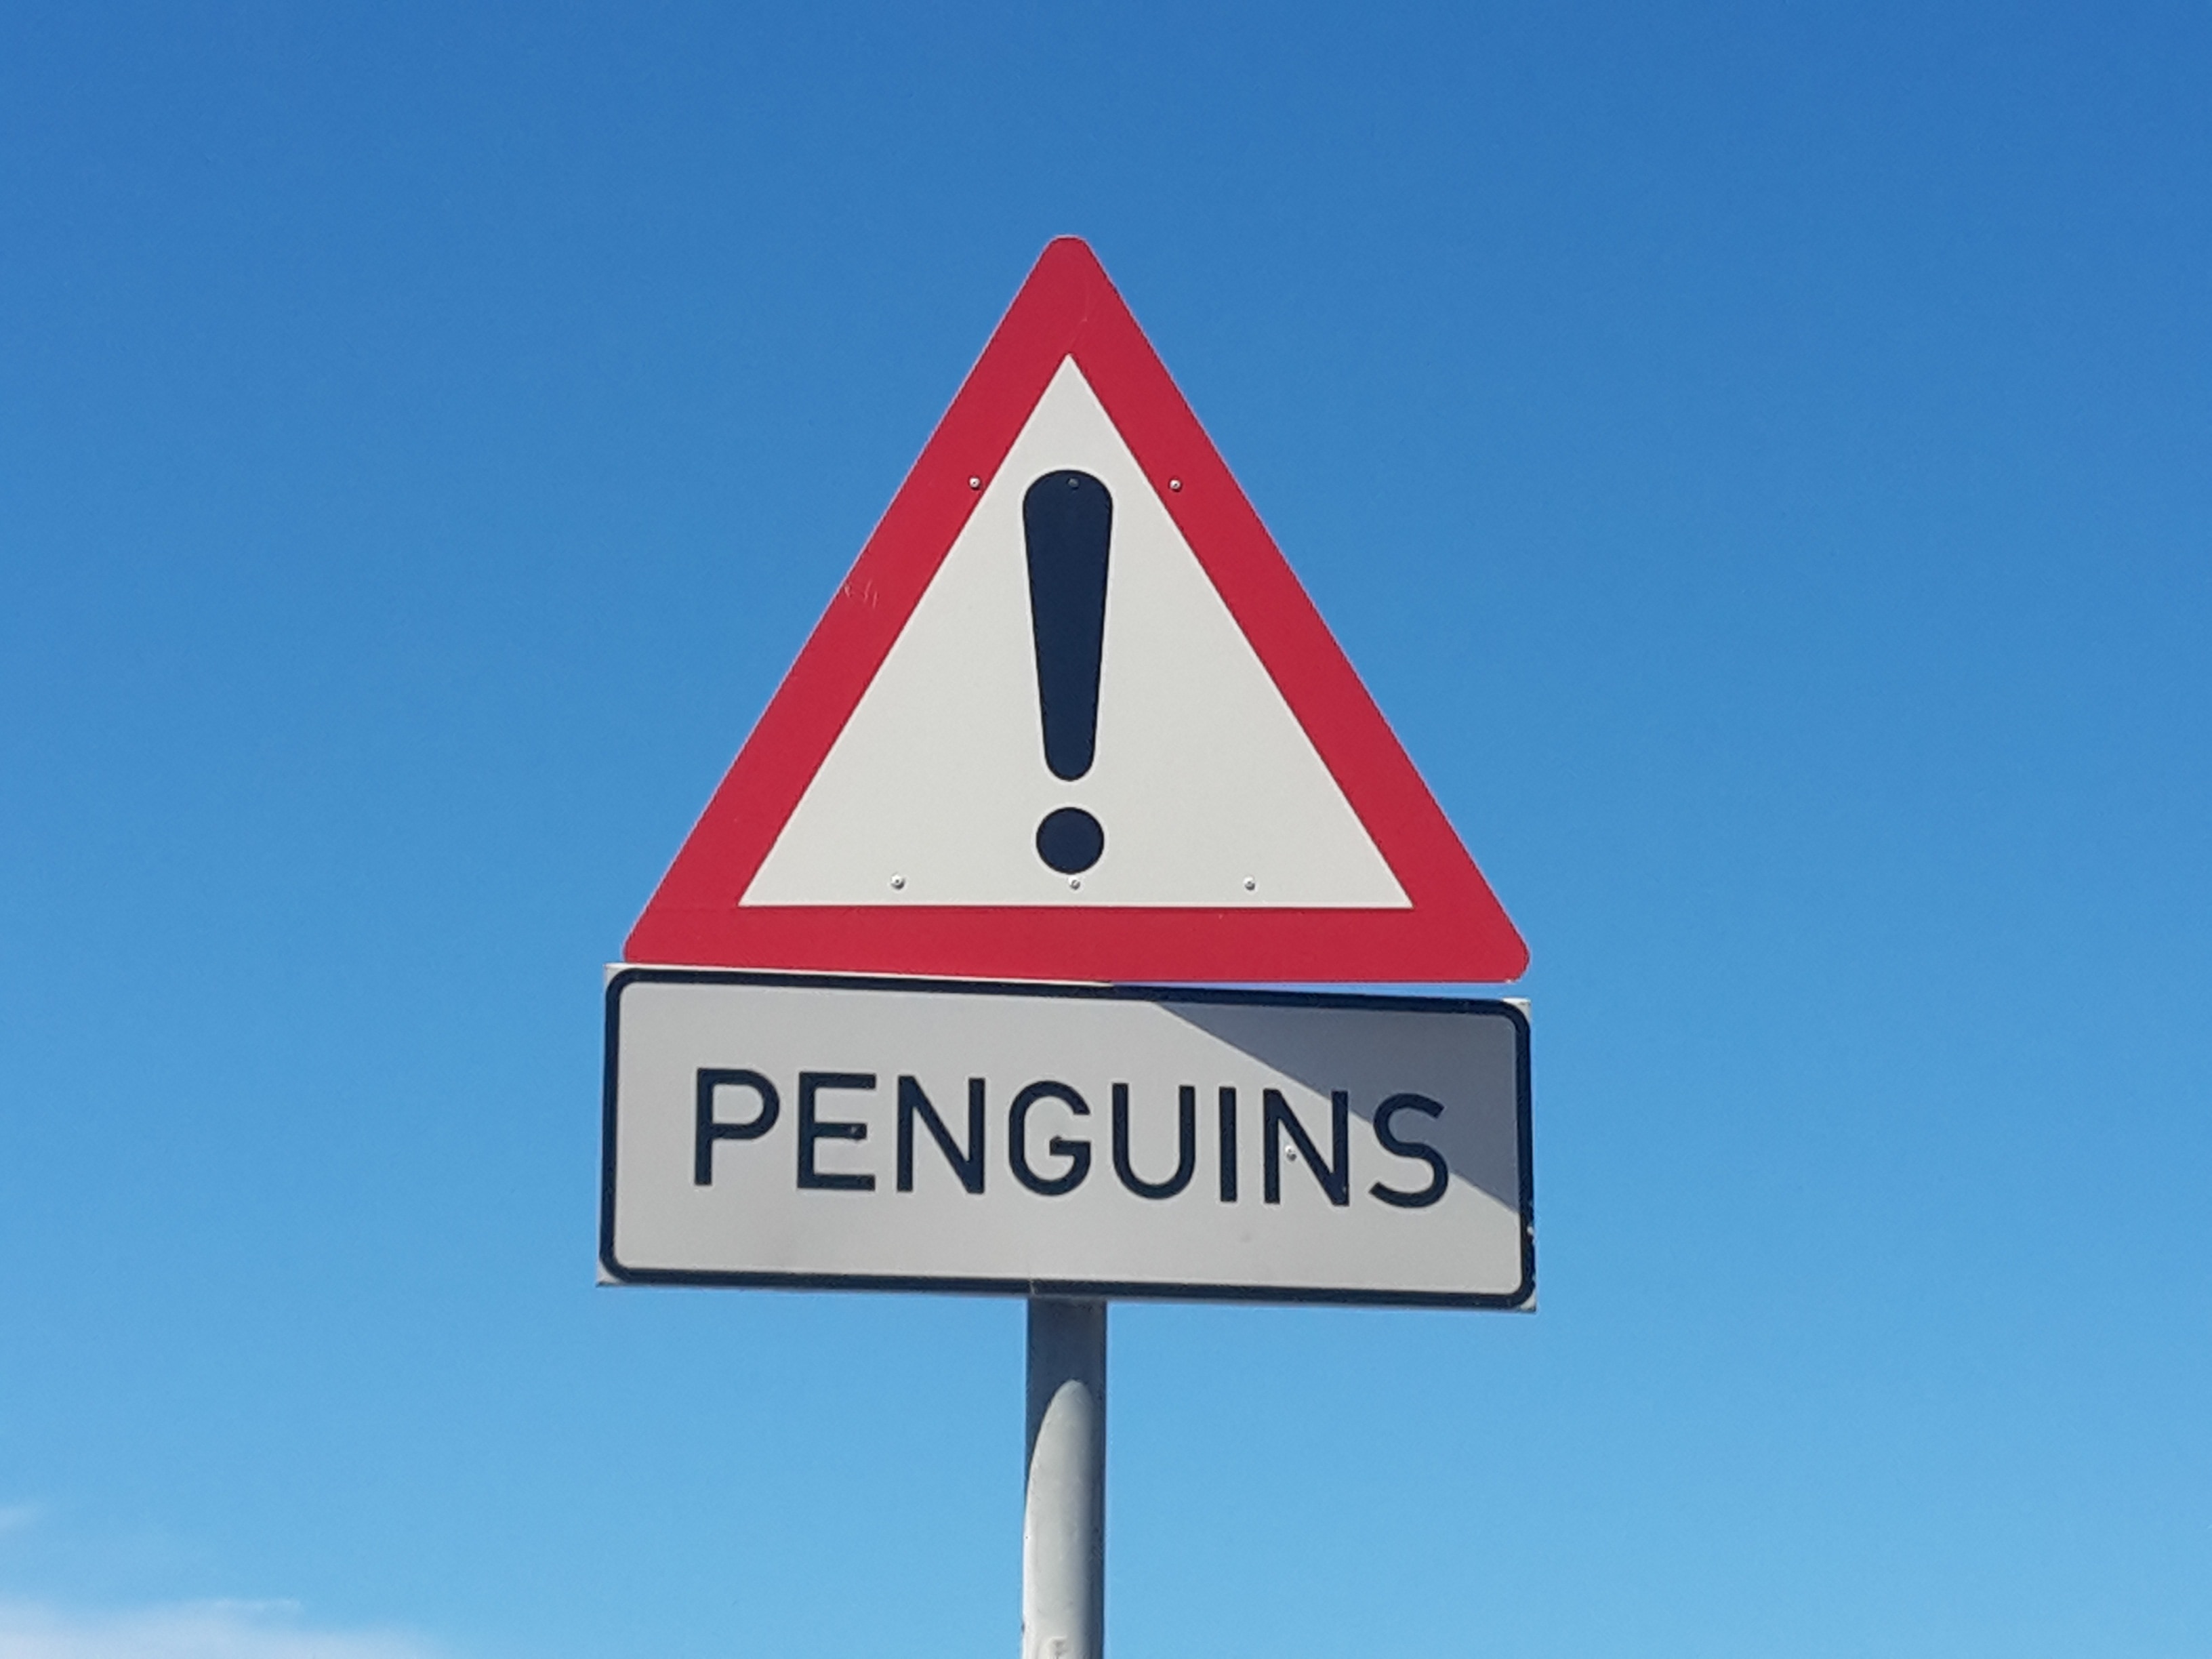 Penguins stop road sign during daytime